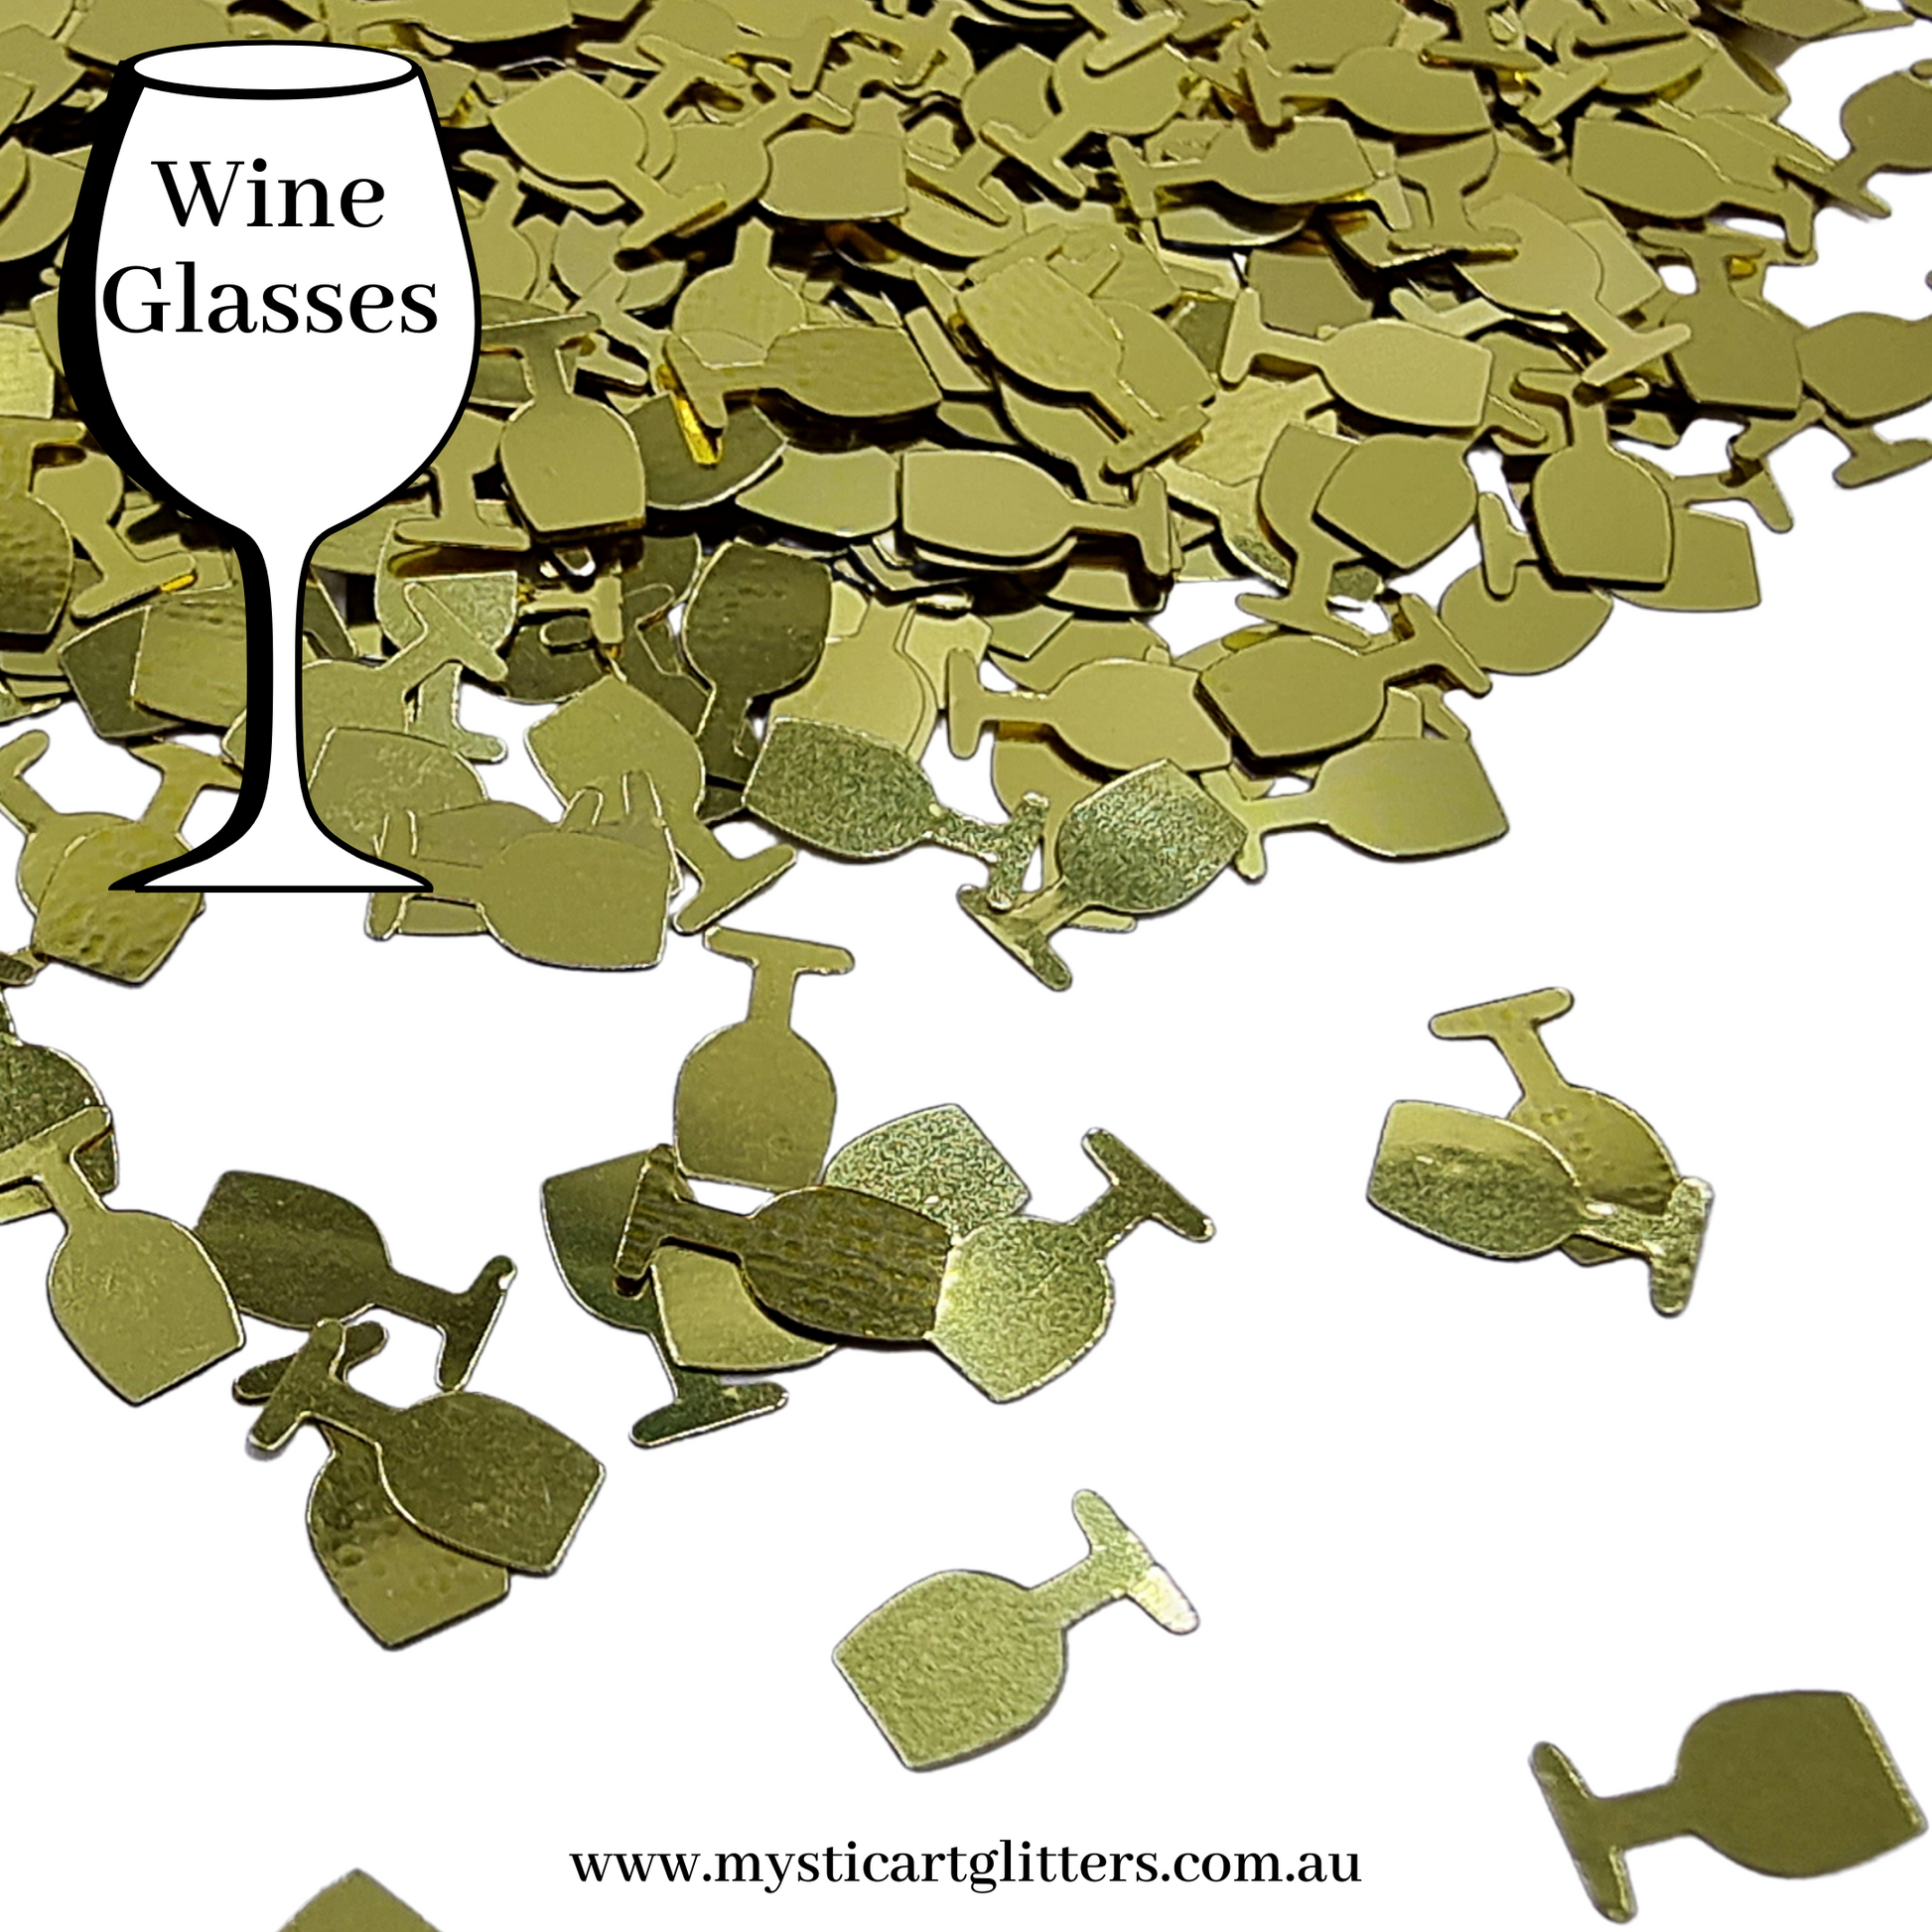 Wine Glasses - Mystic Art Glitters